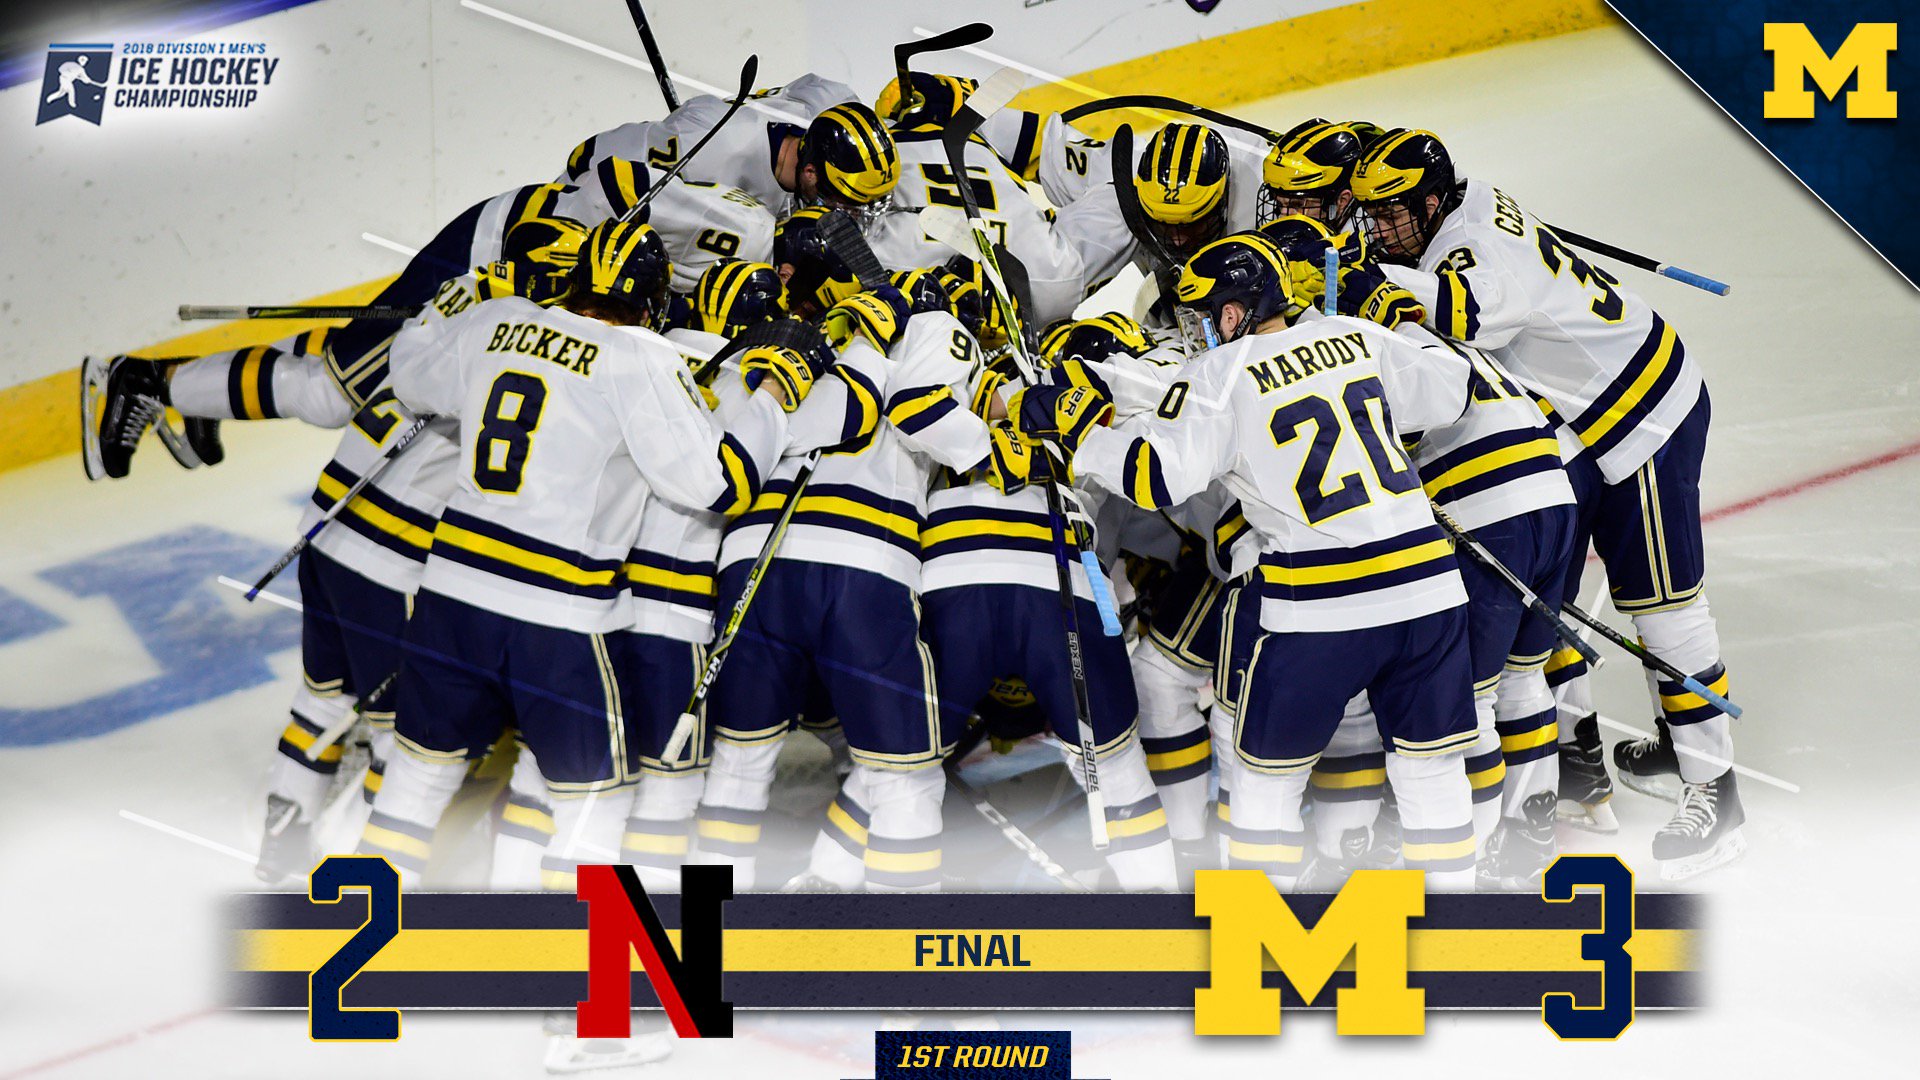 Michigan Hockey on X: Michigan WINS! #GoBlue〽️  / X